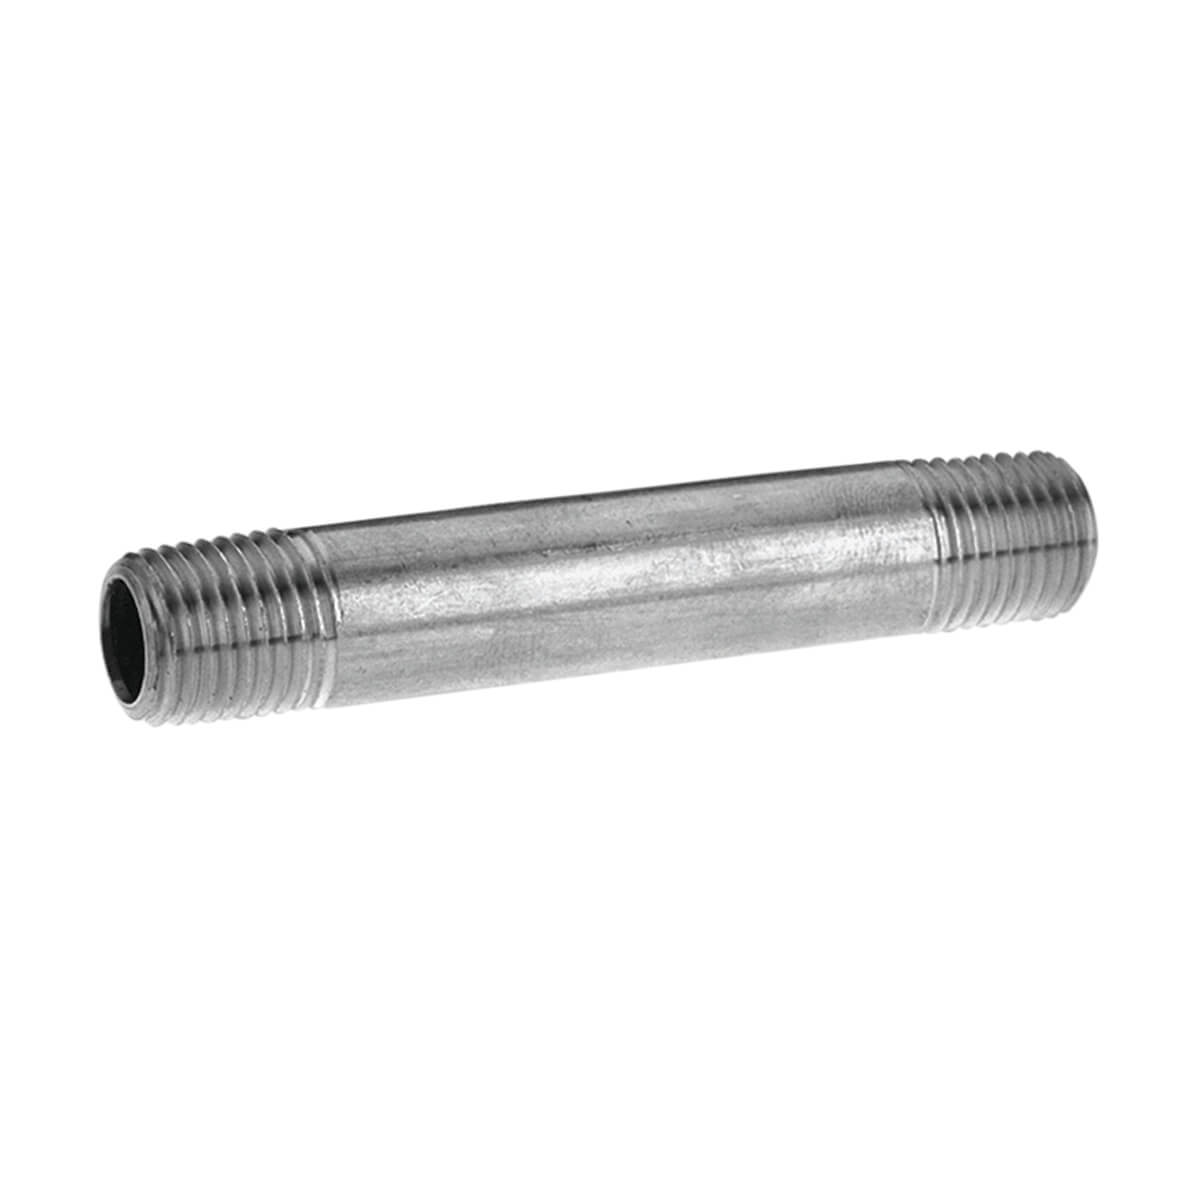 Pipe Nipple Galvanized Steel - 1-1/4-in x CLOSE